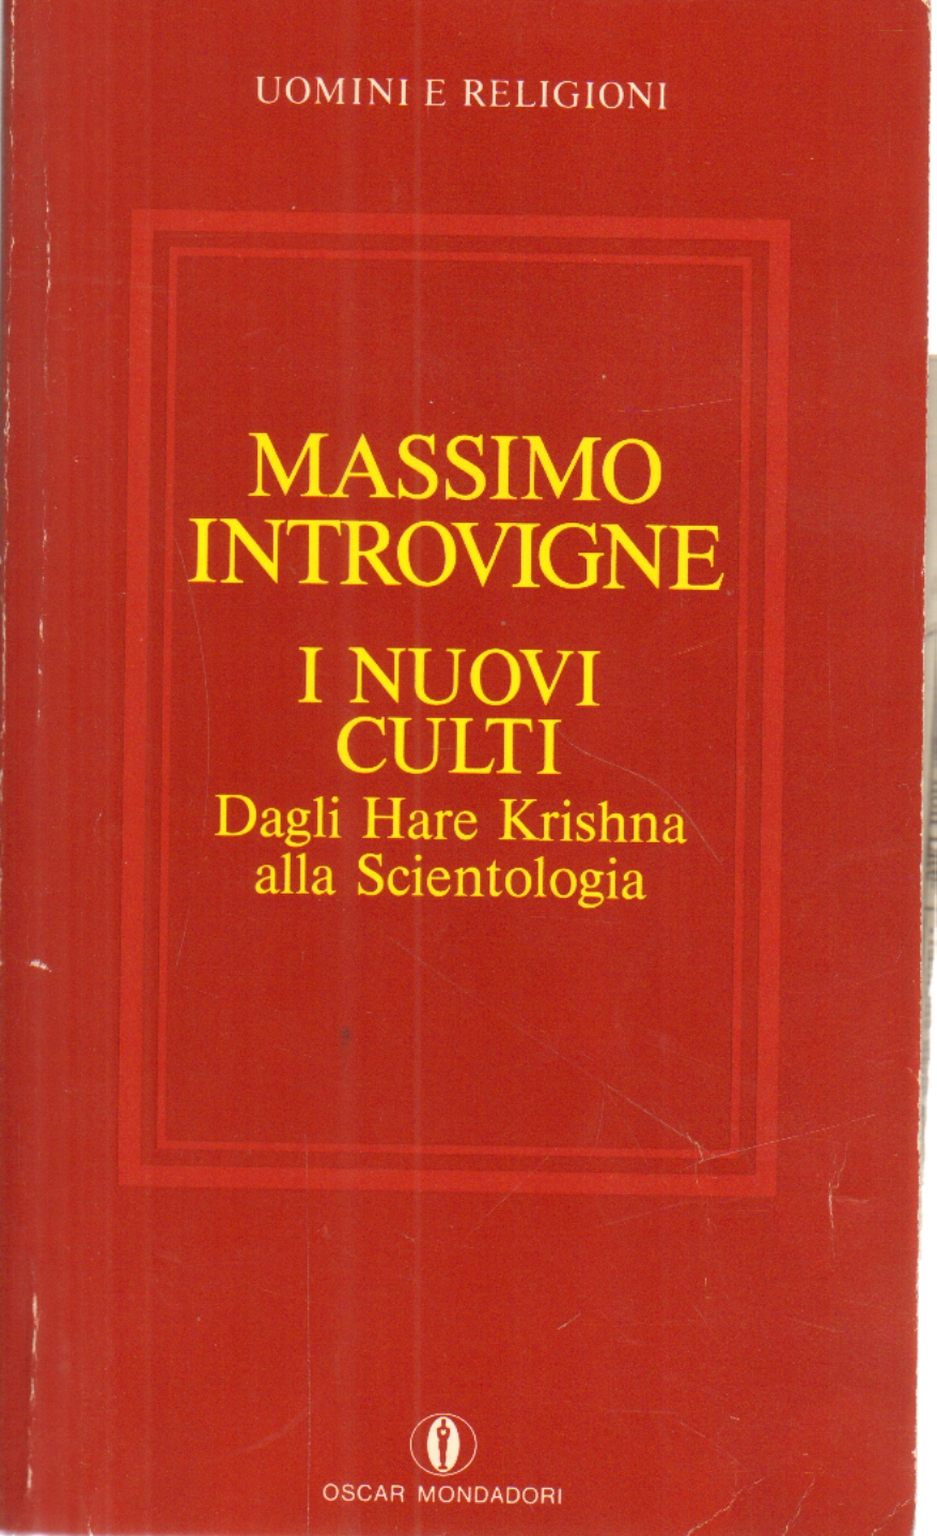 Las nuevas religiones, Massimo Introvigne